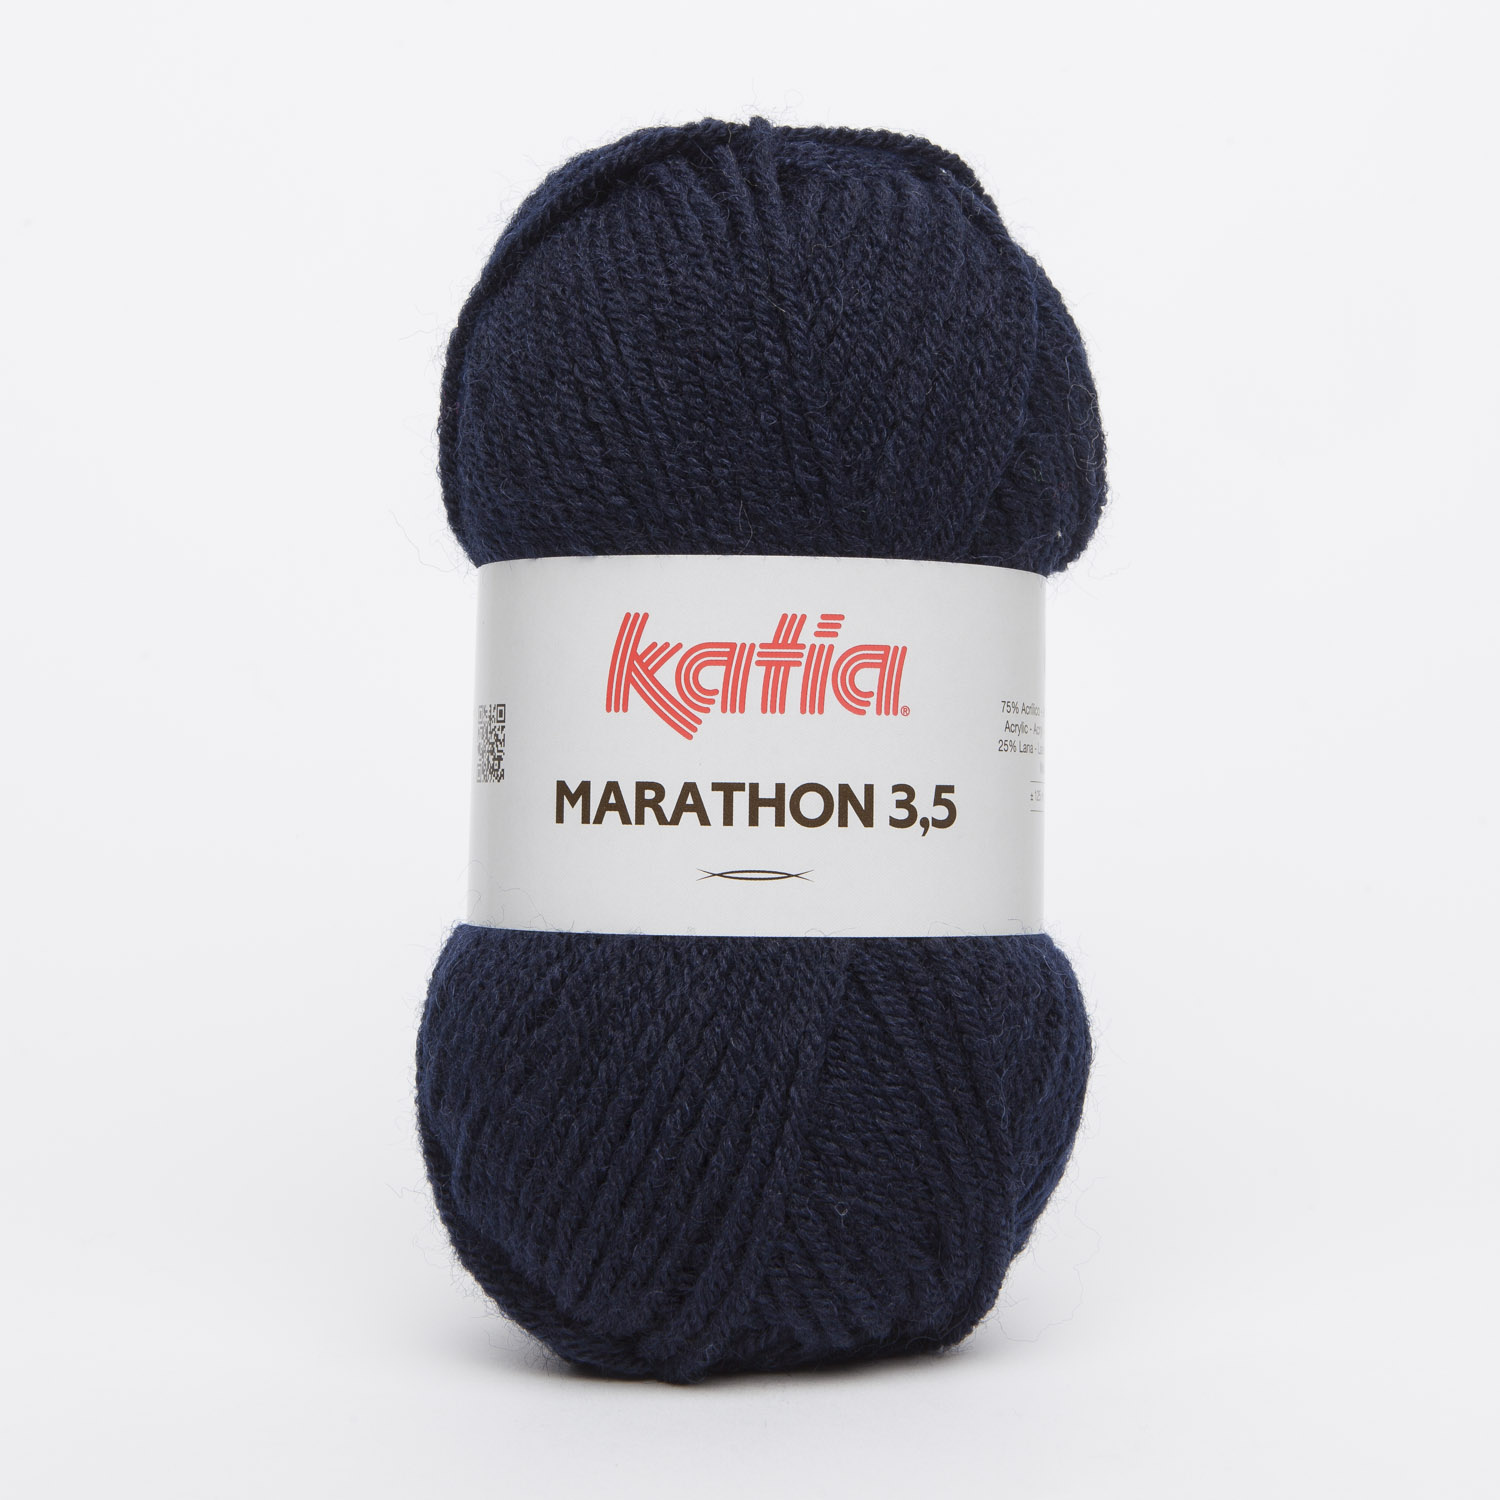 Katia Marathon 3.5 no 05